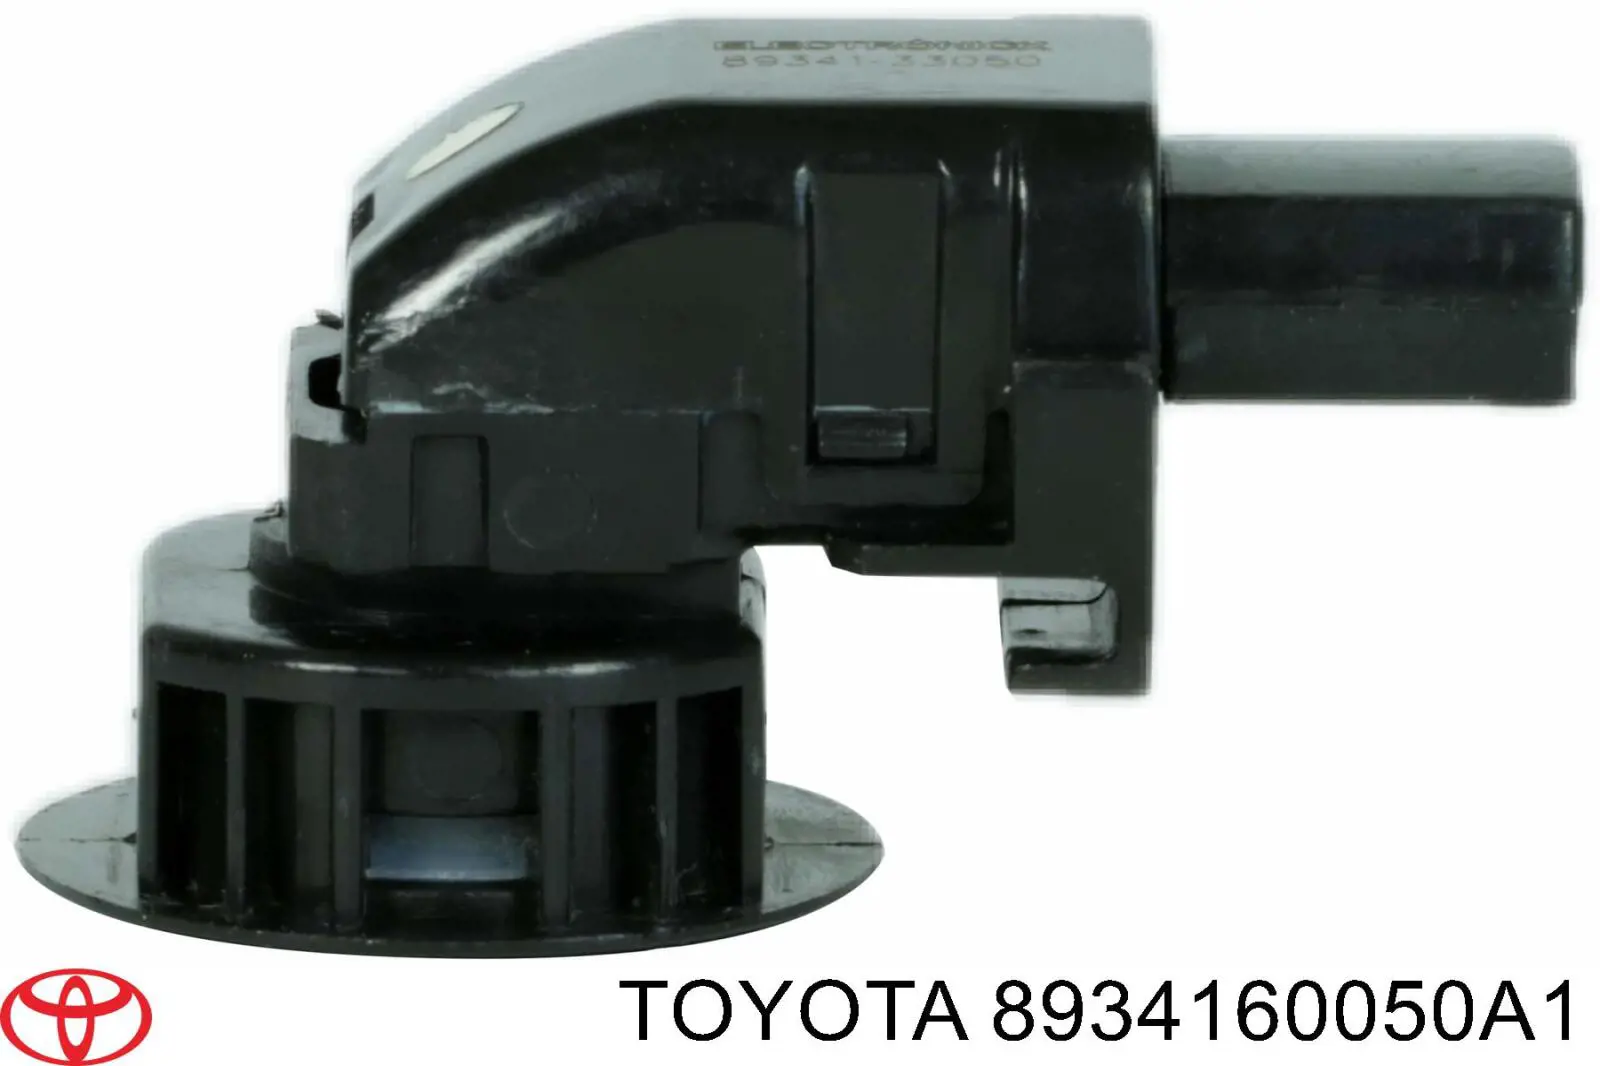 8934160050B1 Toyota sensor alarma de estacionamiento (packtronic Trasero Lateral)